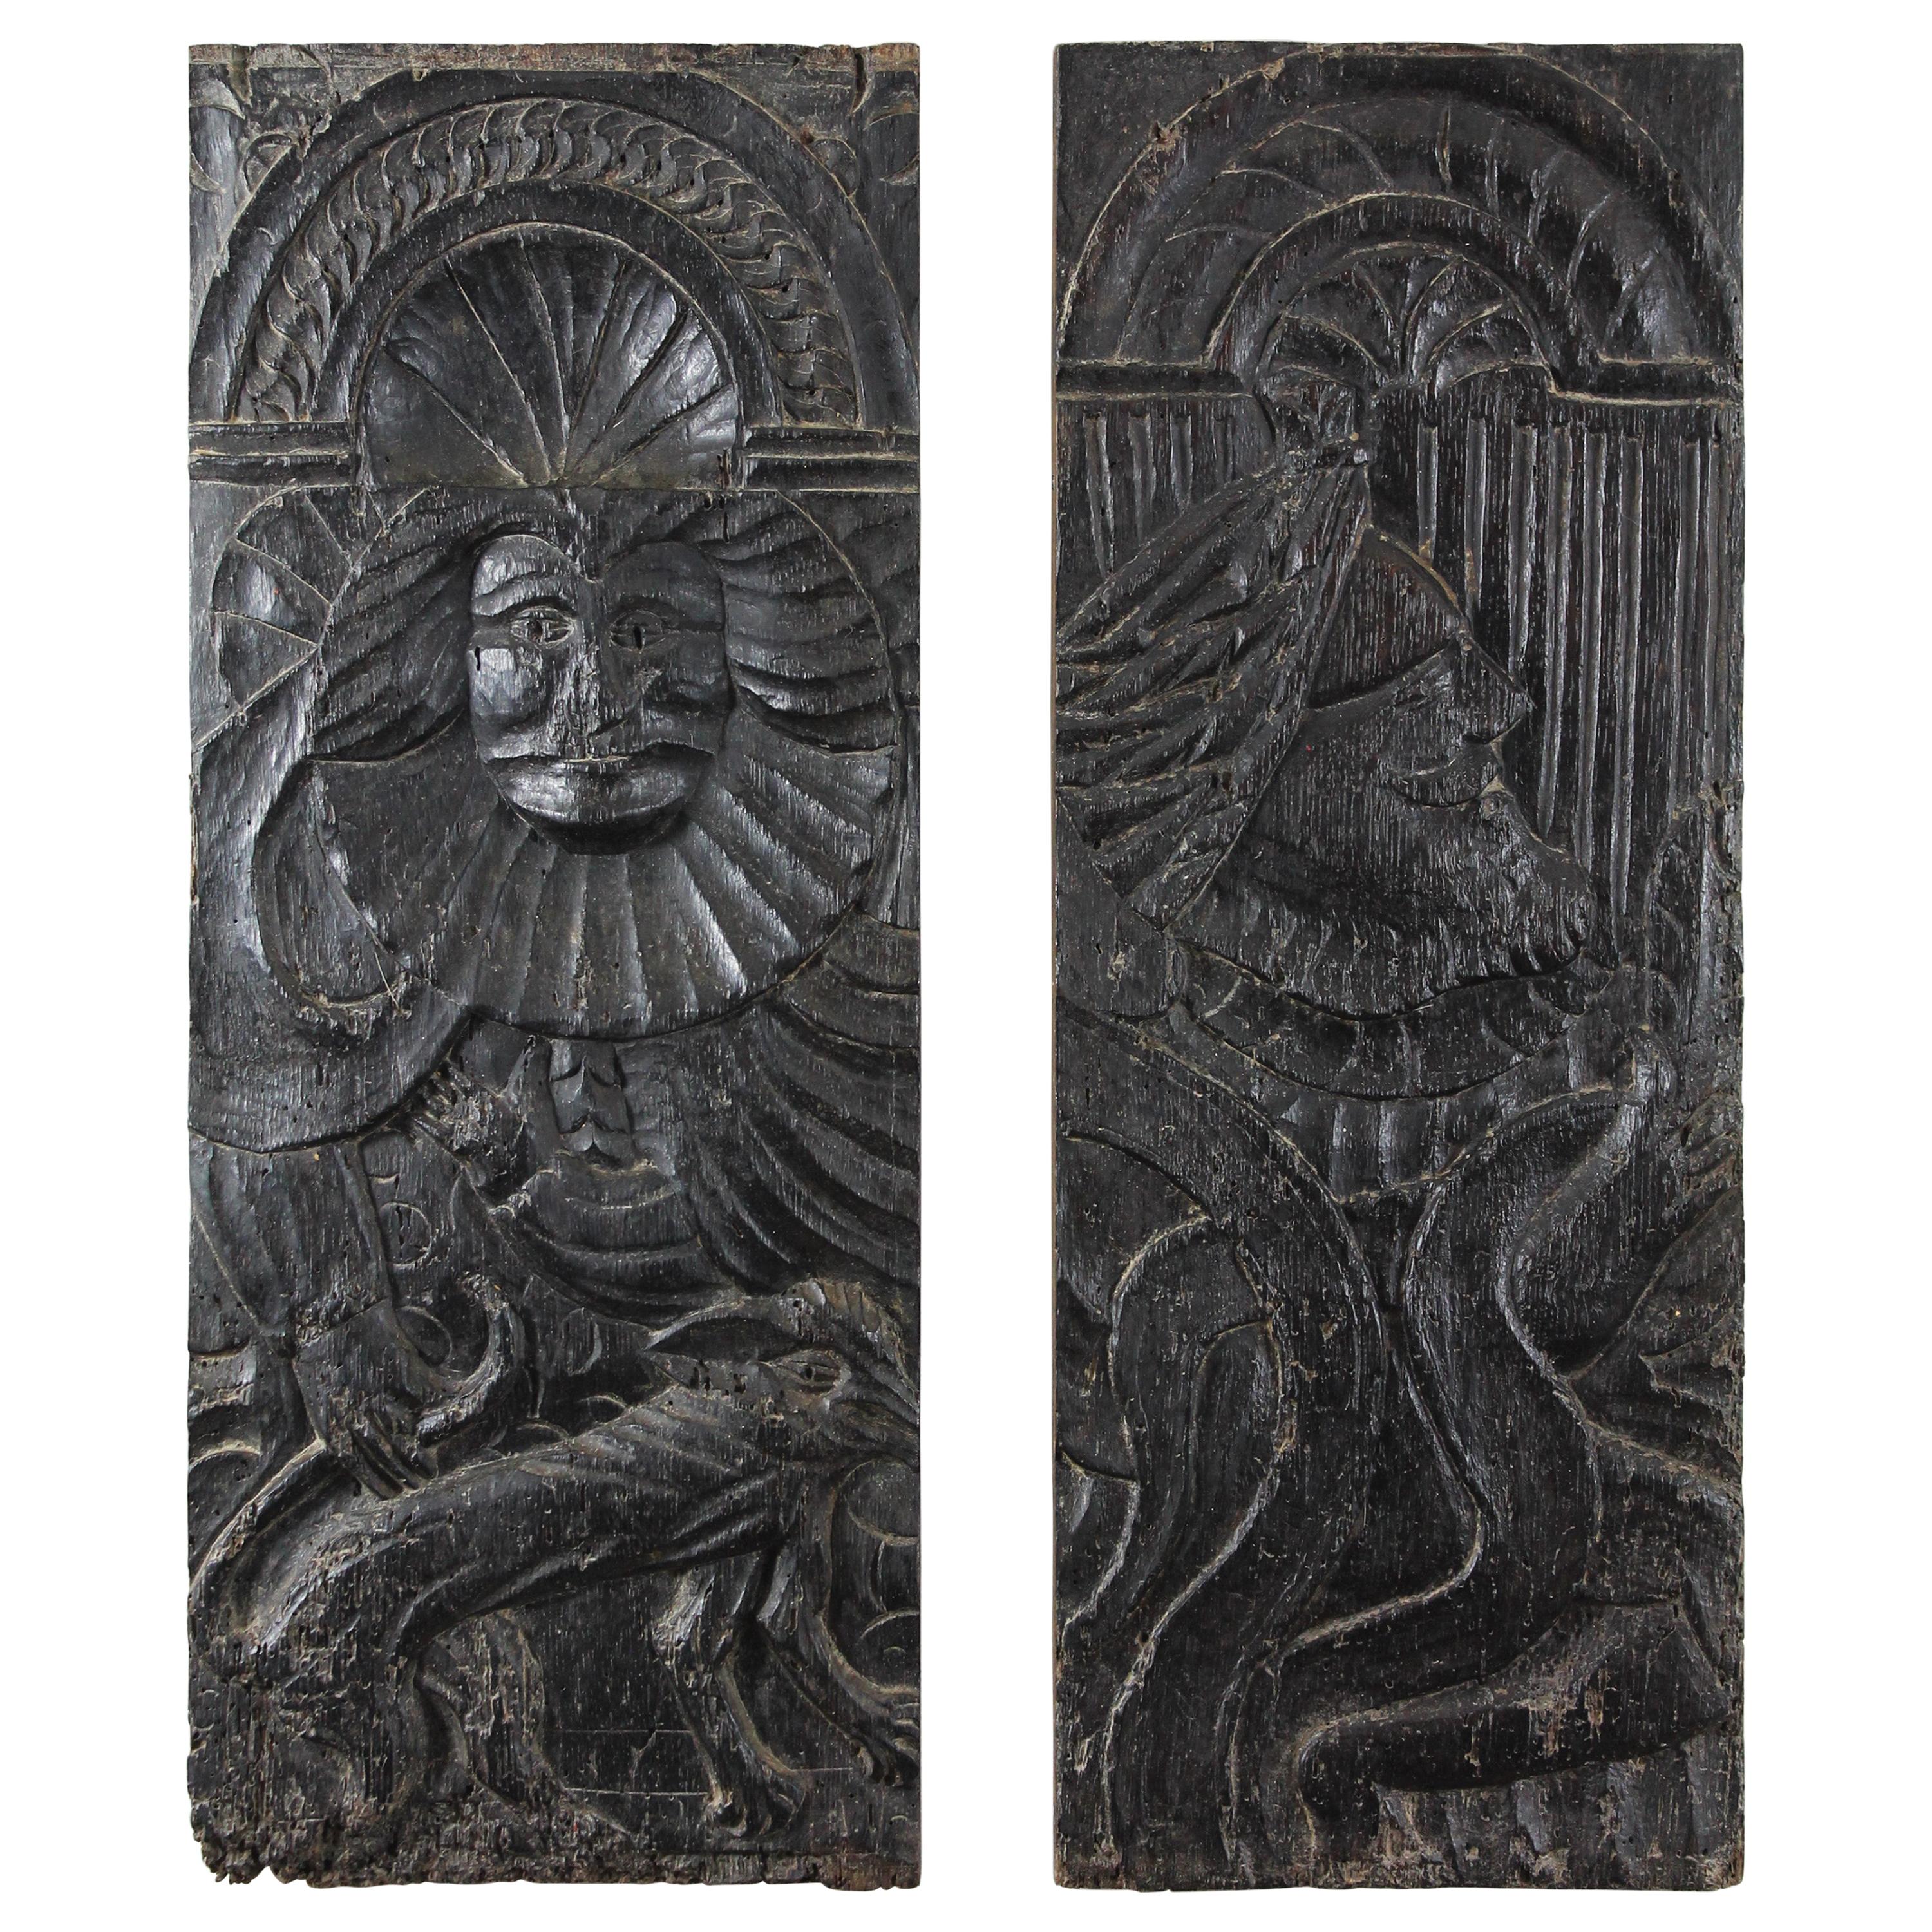 Renaissance Period Hand Carved Oak Panels, 16th Century